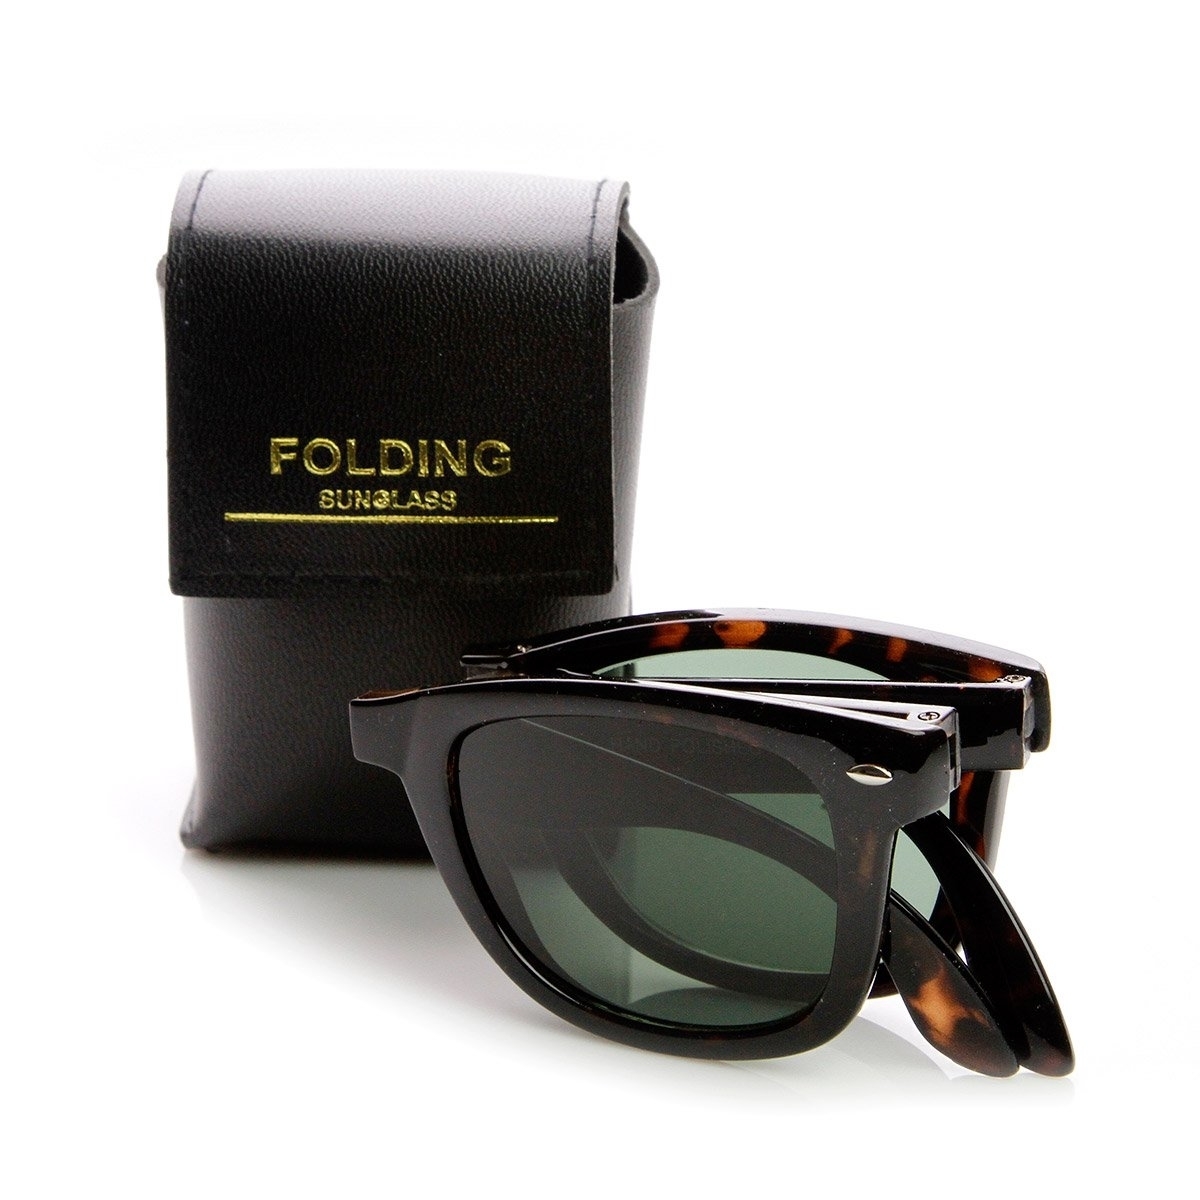 Limited Edition Folding Pocket Horn Rimmed Sunglasses + Case - Rubberized Black